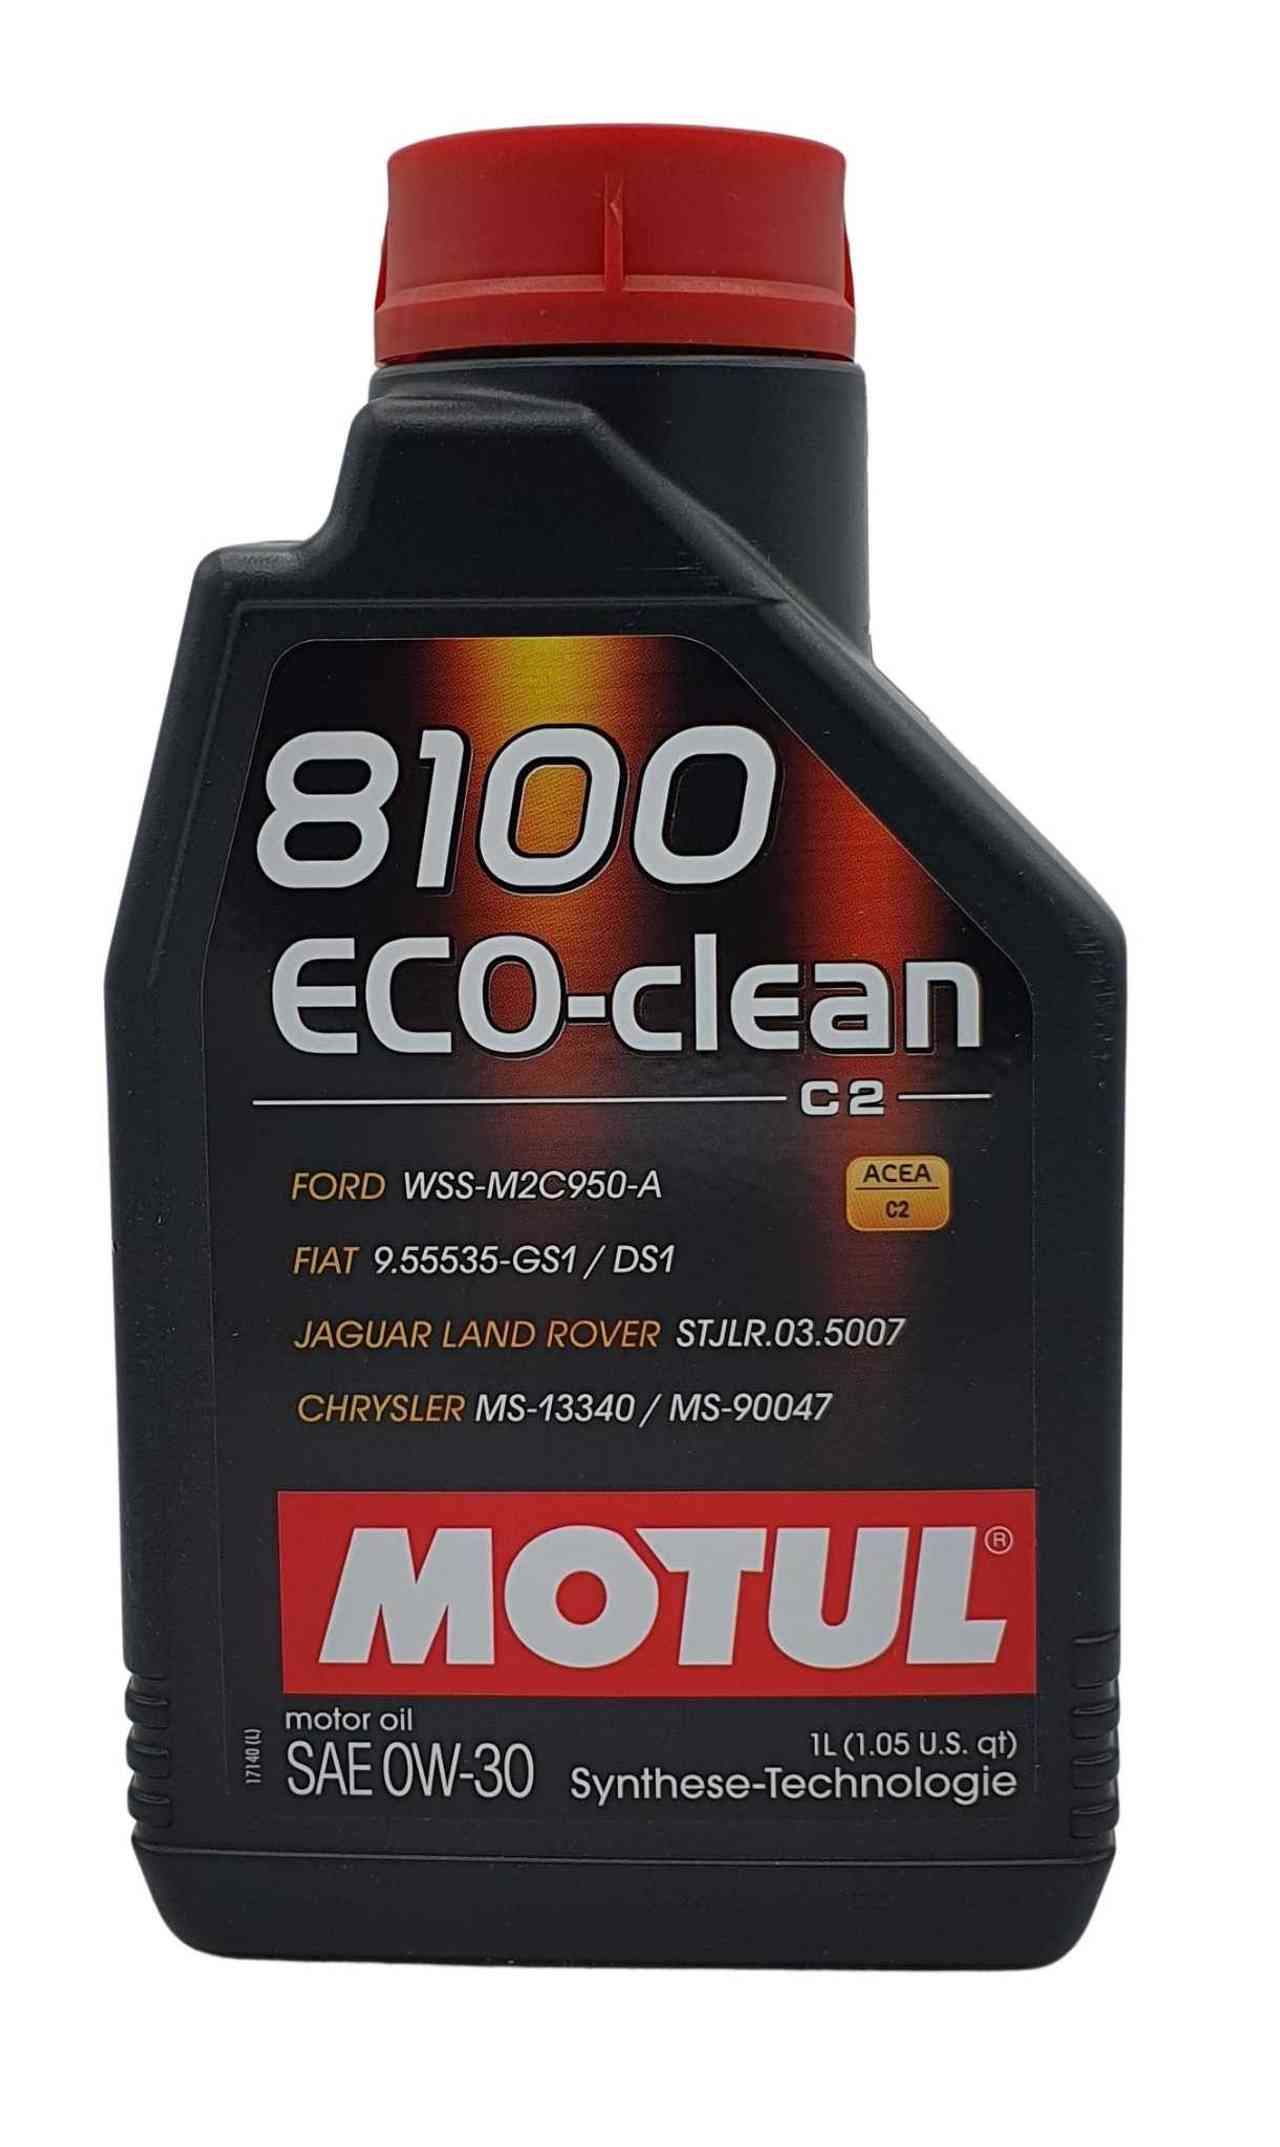 Motul 8100 Eco-clean 0W-30 1 Liter